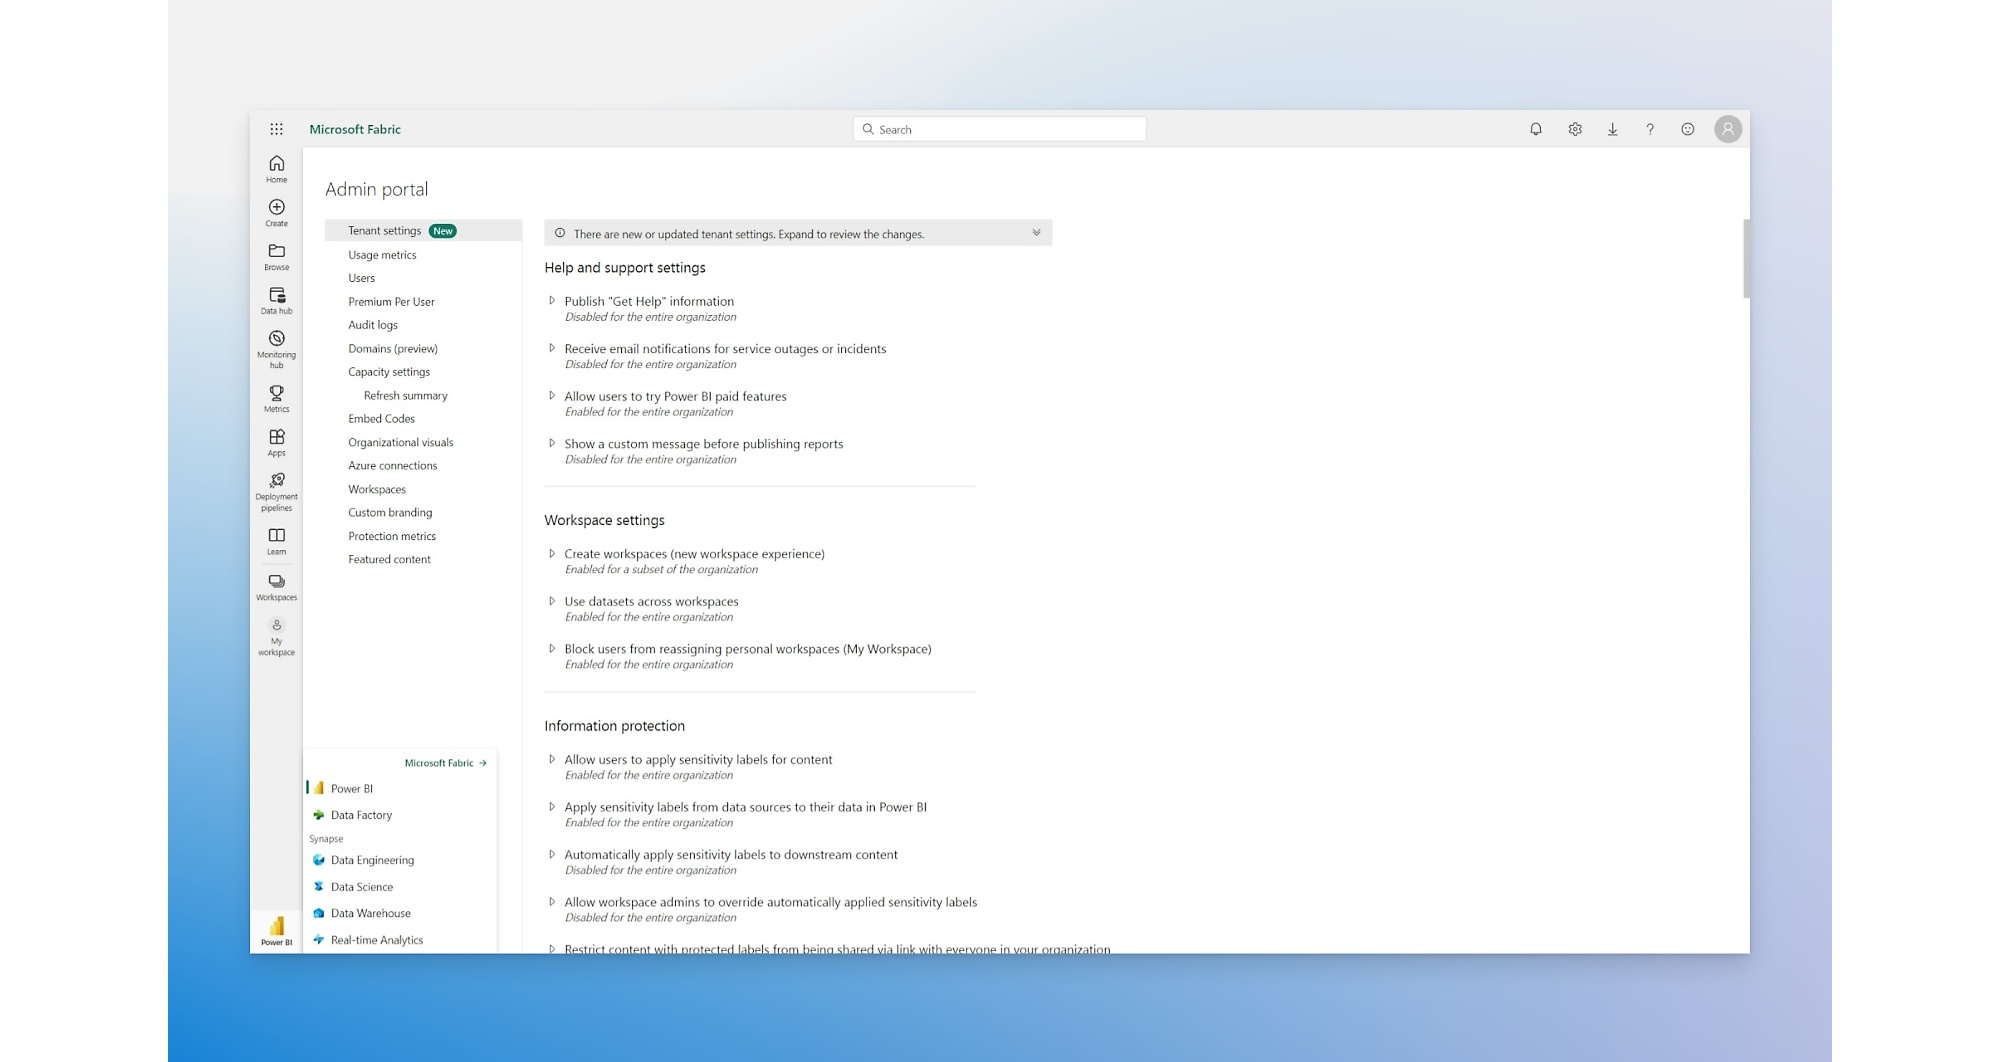 Microsoft Fabric Admin portal with various settings